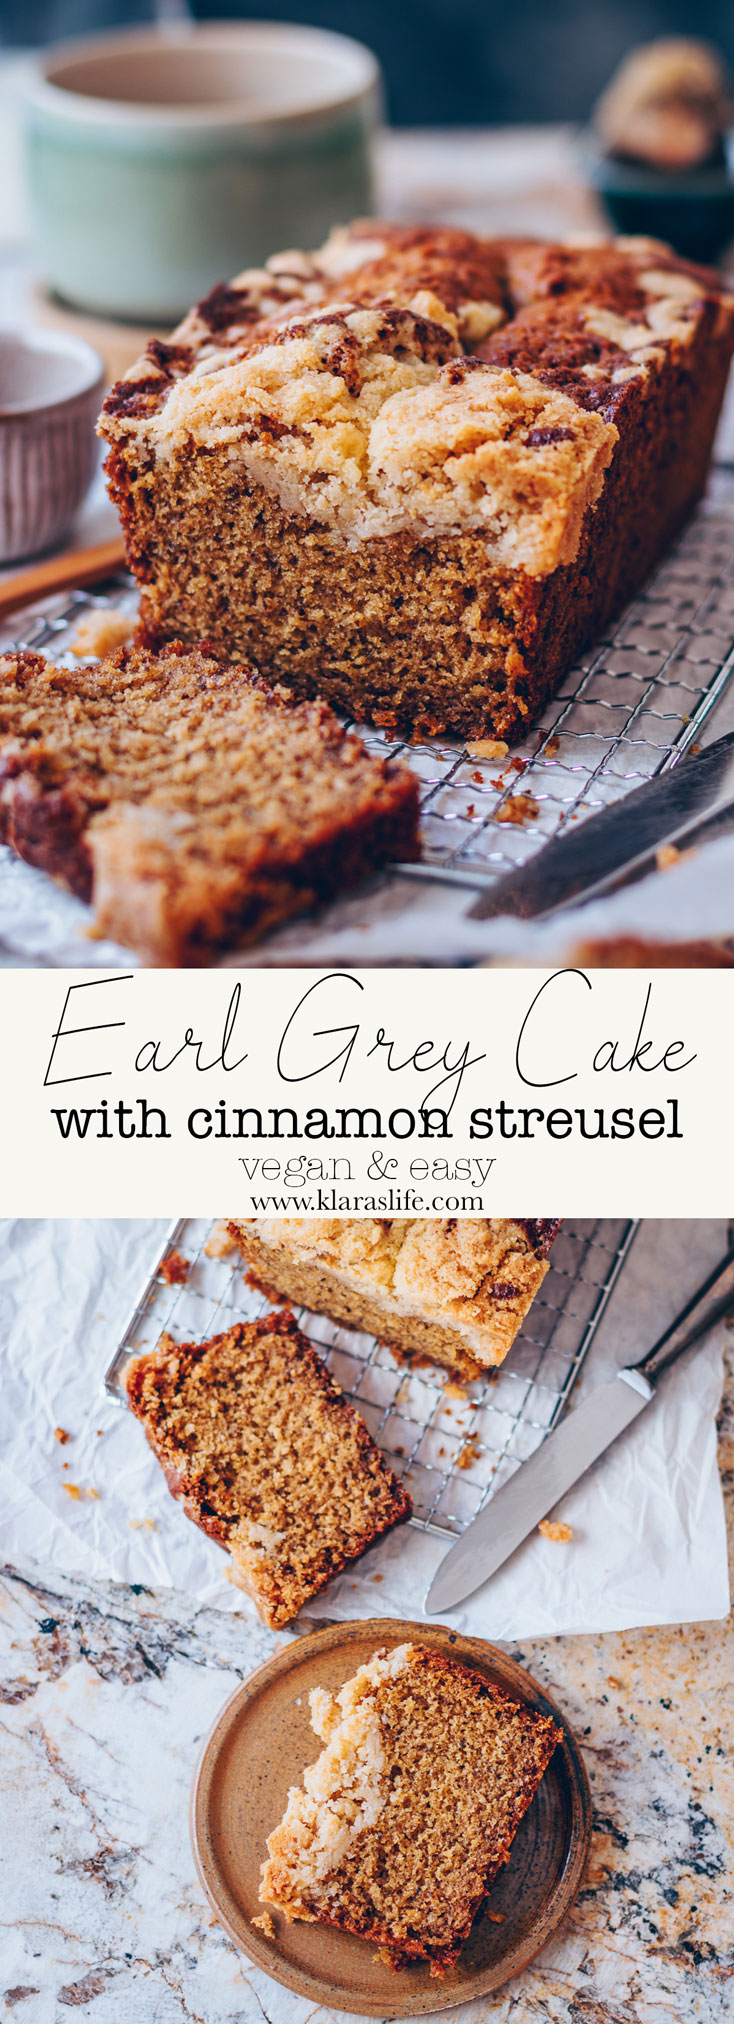 Earl Grey Cake with cinnamon streusel